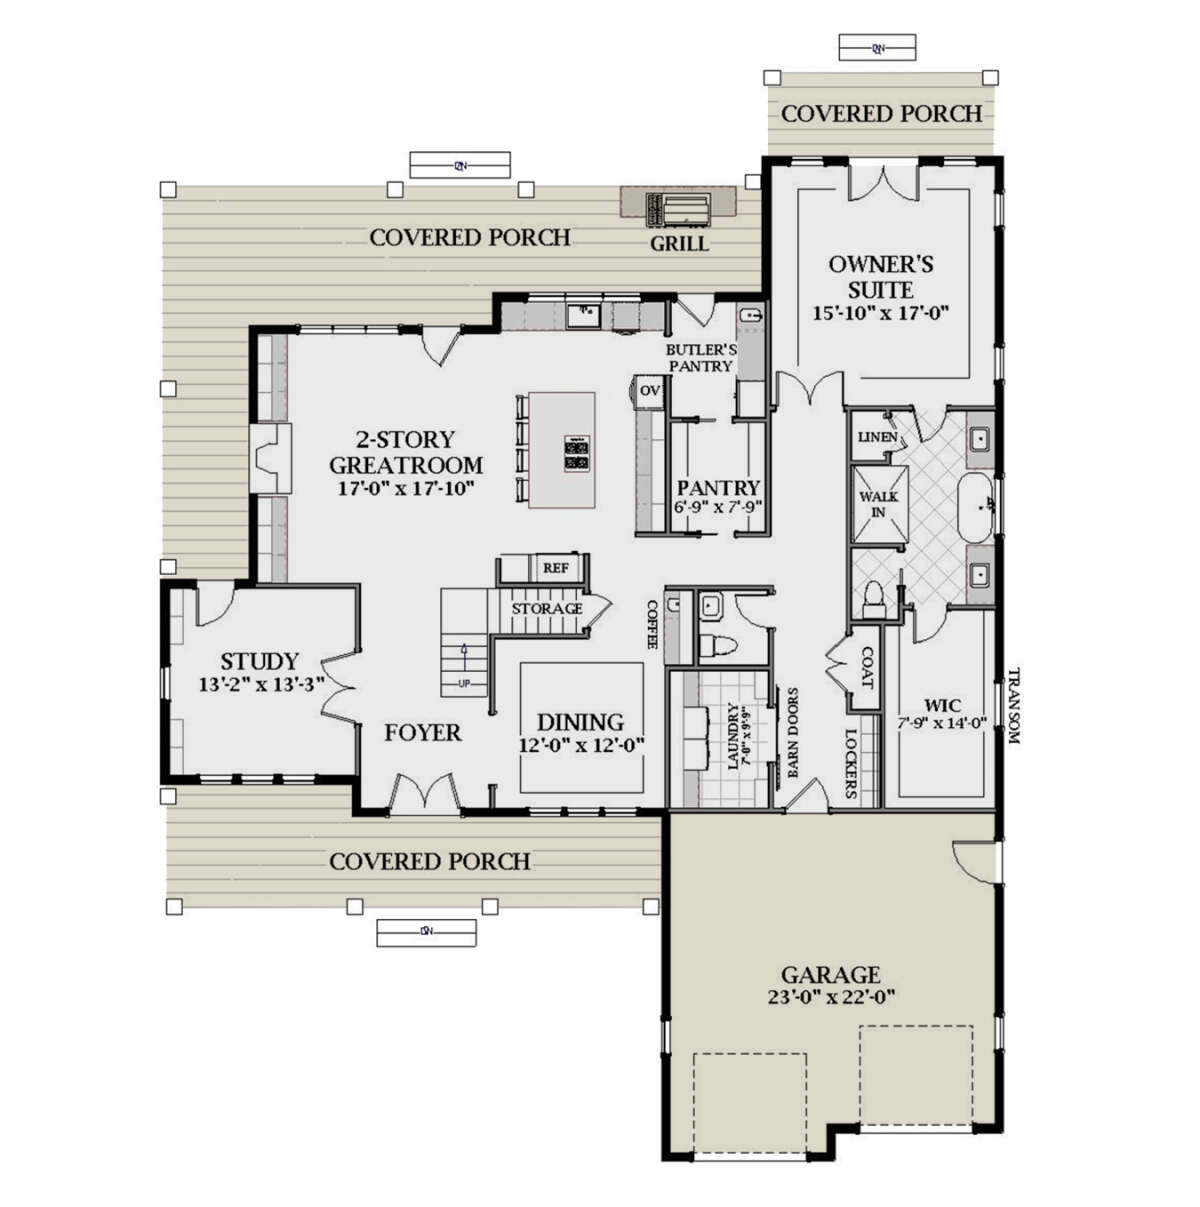 Modern Farmhouse Plan: 3,123 Square Feet, 3 Bedrooms, 3.5 Bathrooms ...